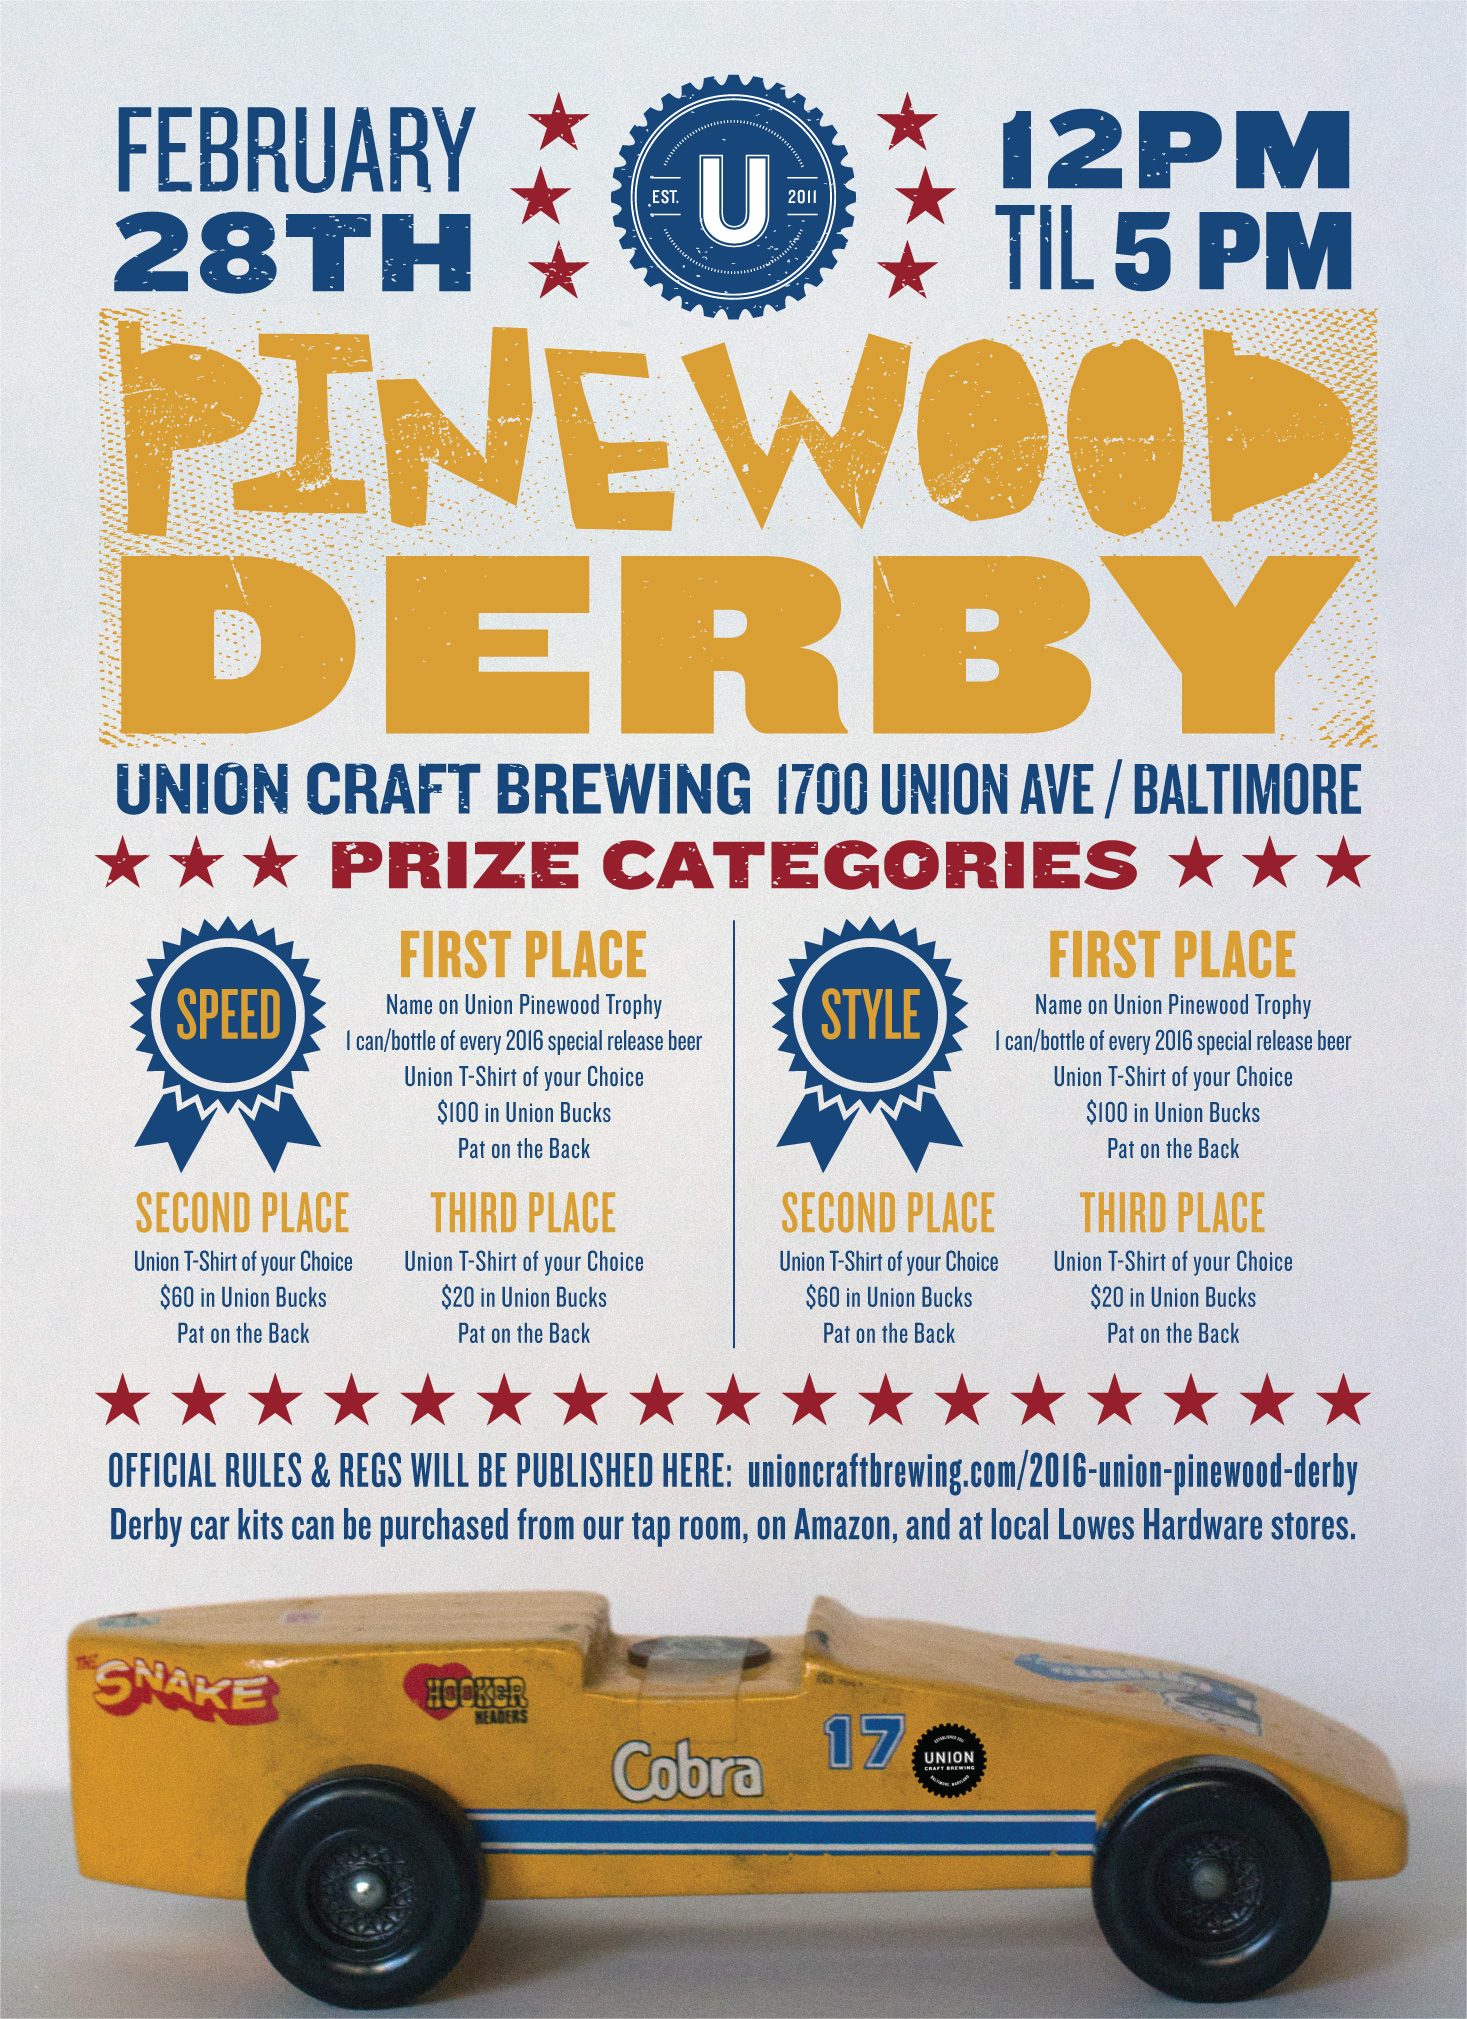 union-craft-brewing-2016-union-pinewood-derby-union-craft-brewing